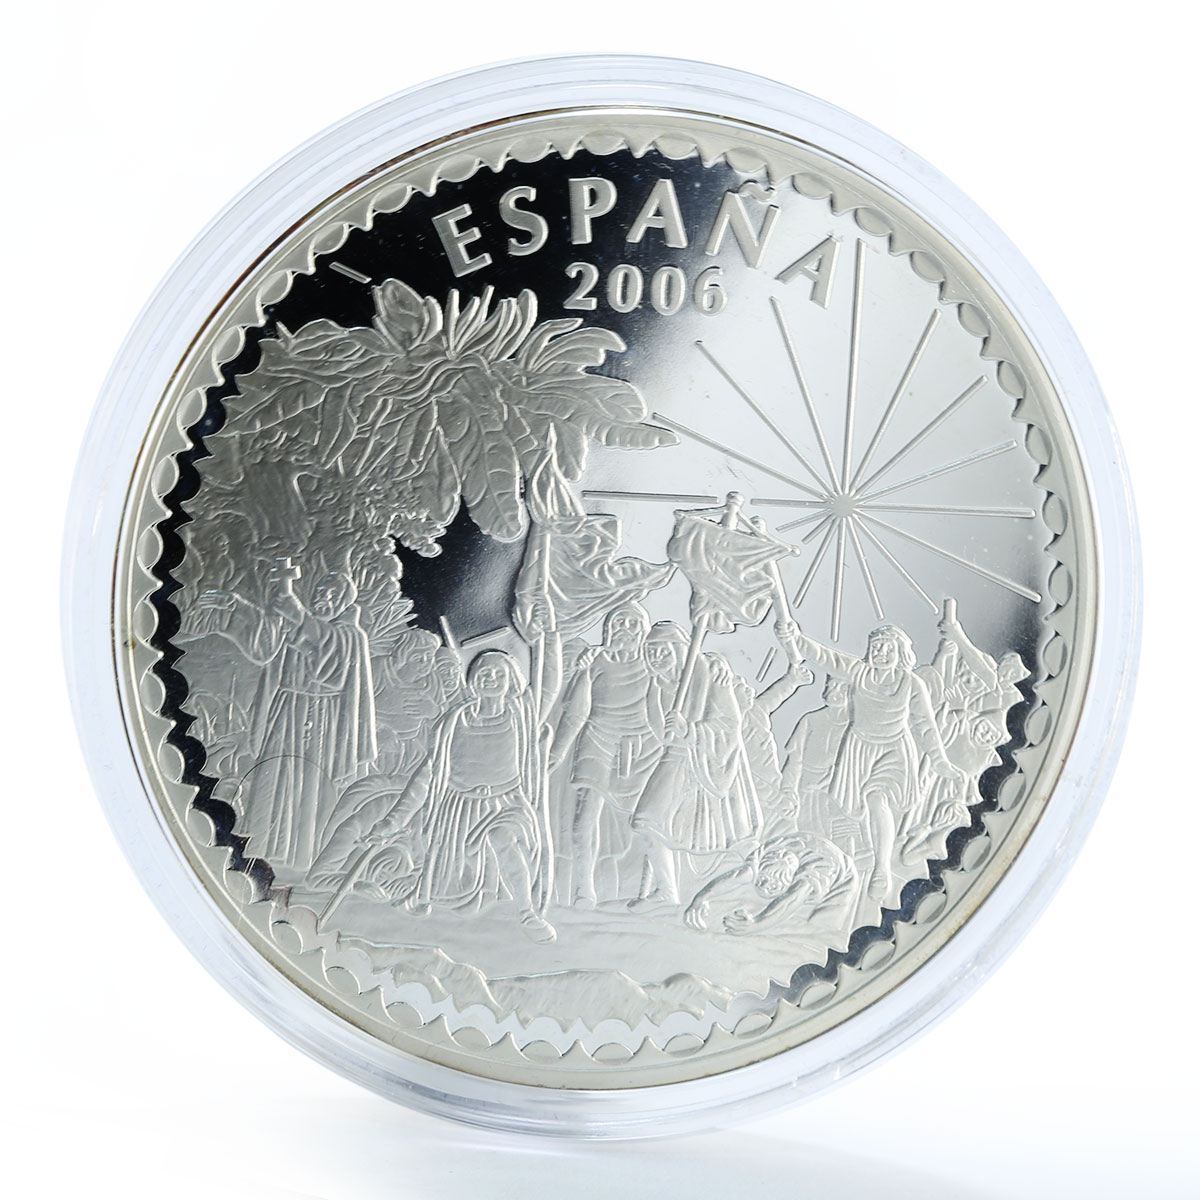 Spain, 50 euro, Cristobal Colon Christopher Columbus America Catholic Monarchs